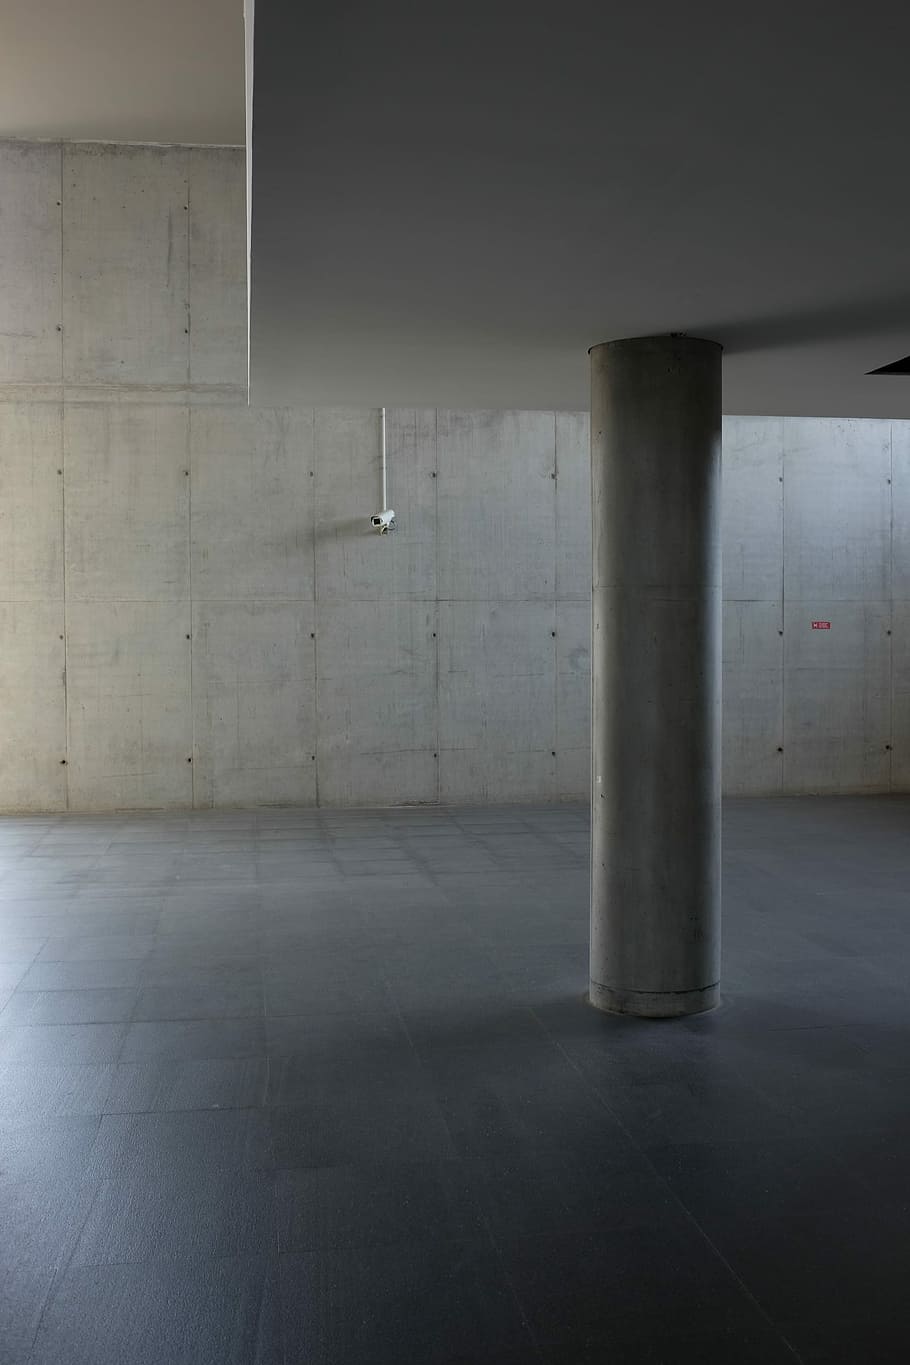 cinza, ladrilhos, concreto, parede, interior, piso, vazio, arquitetura, ninguém, parede - característica do edifício